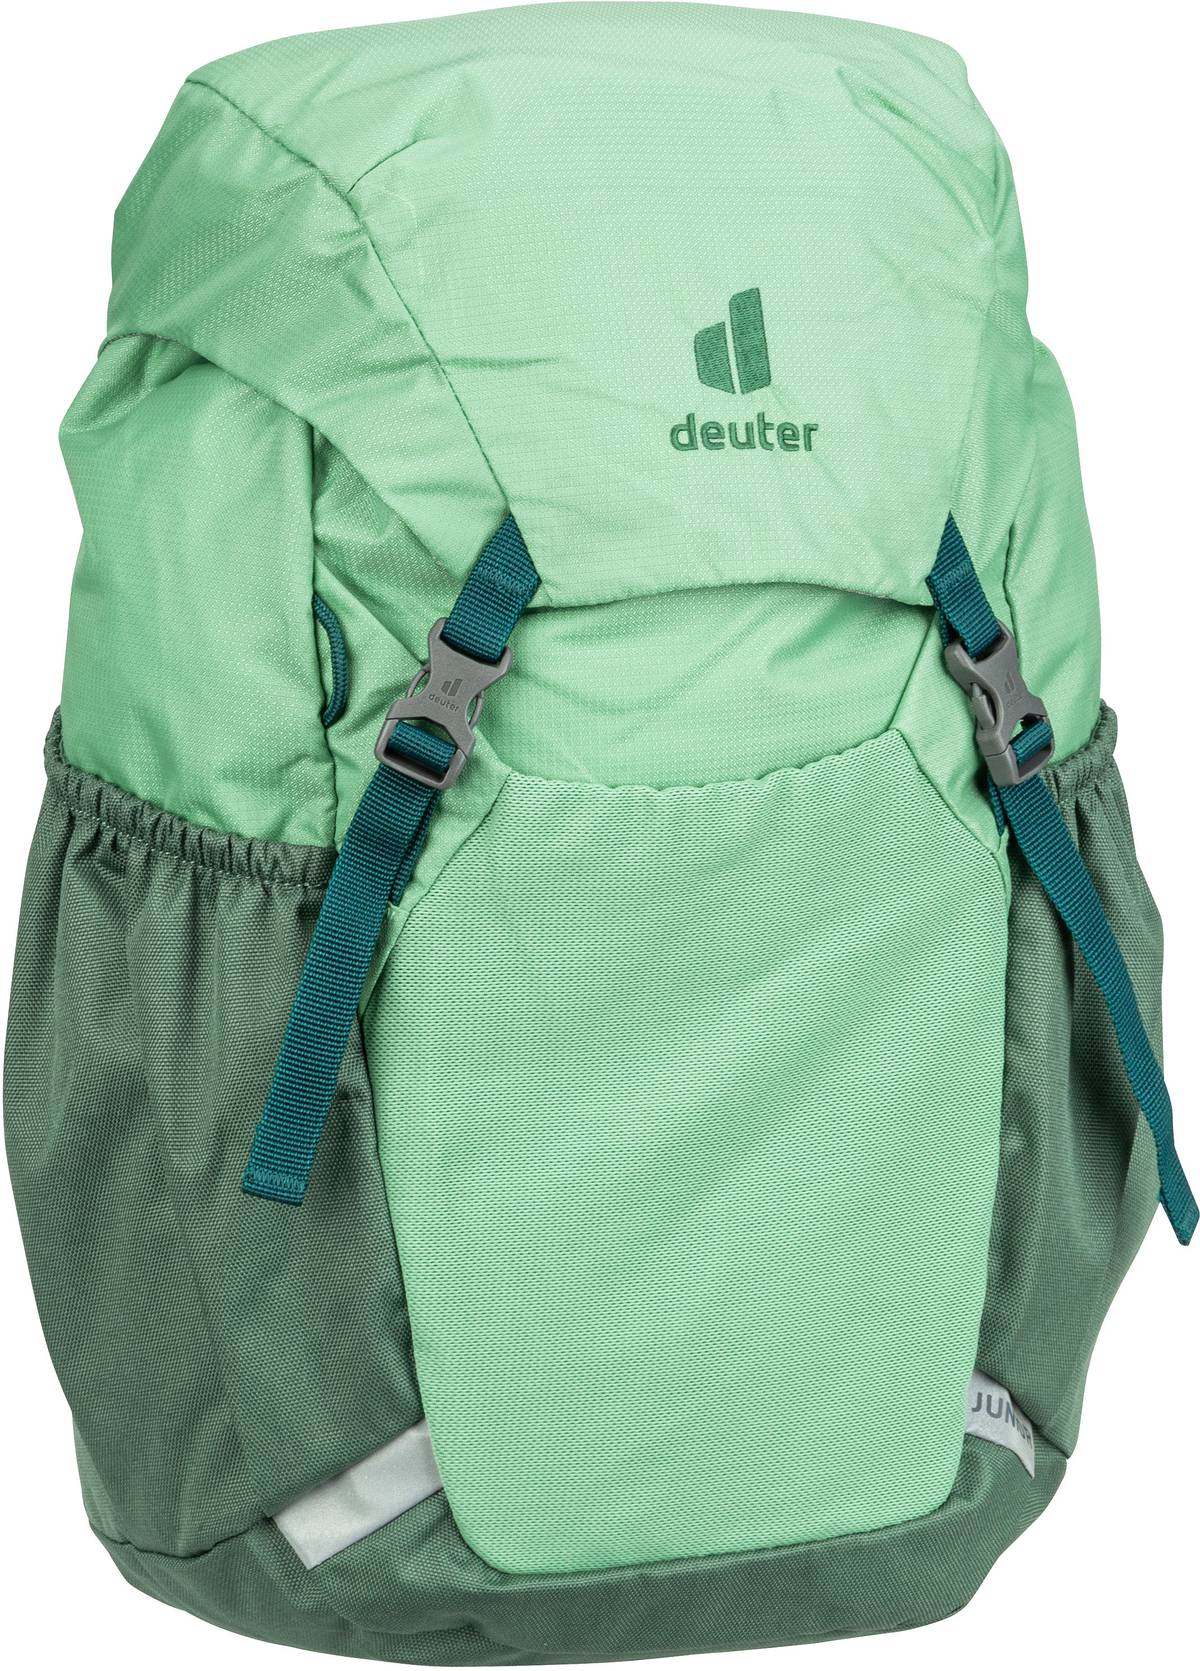 Deuter Junior  in Grün (18 Liter), Rucksack / Backpack